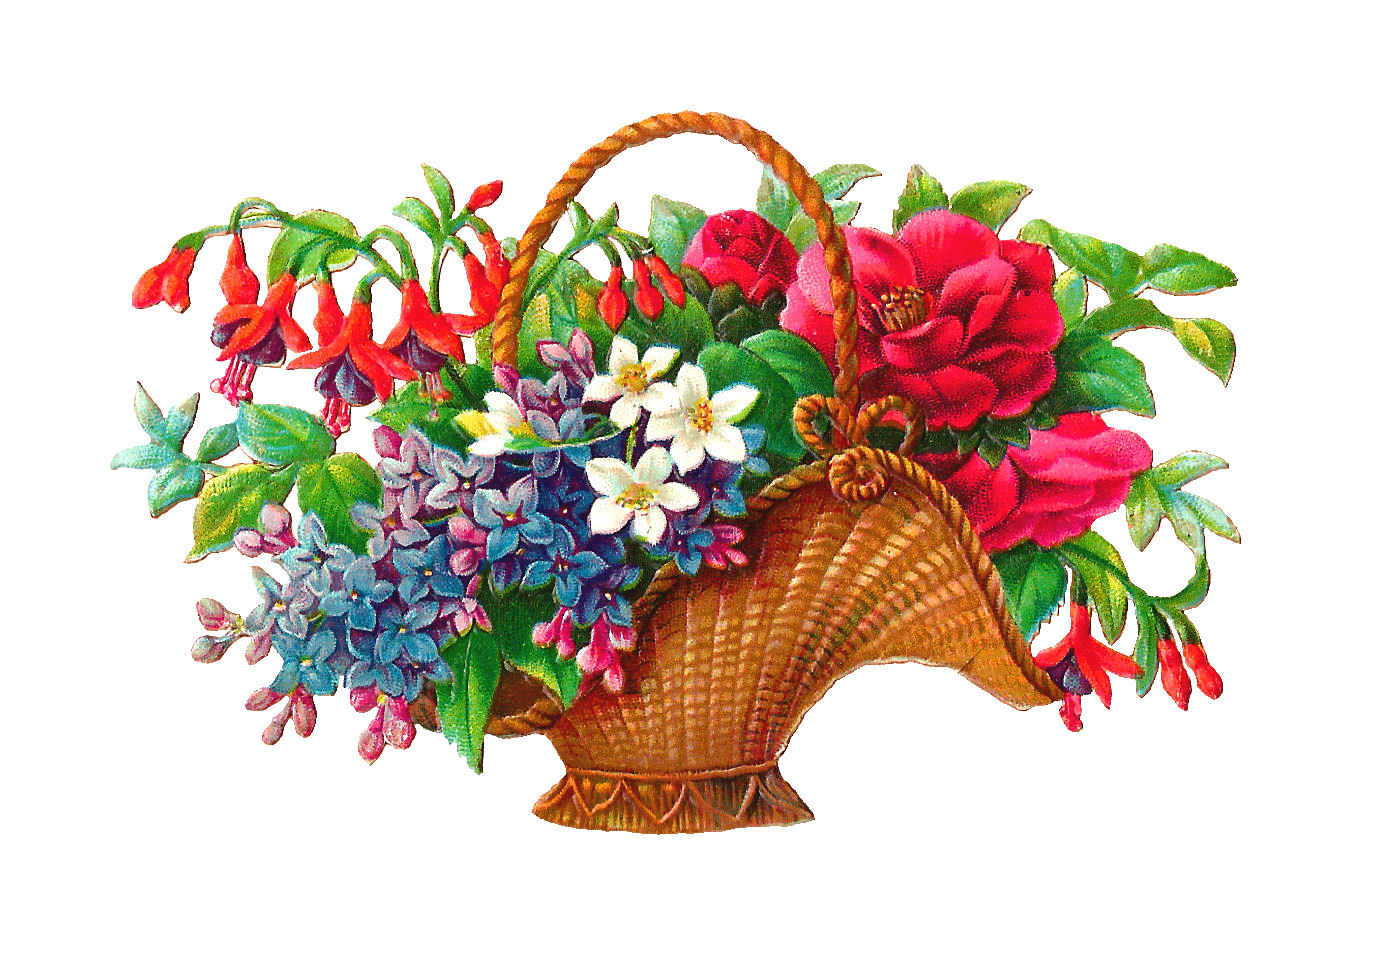 Antique Images: Free Flower Basket Clip Art: 2 Wicket Baskets Full 